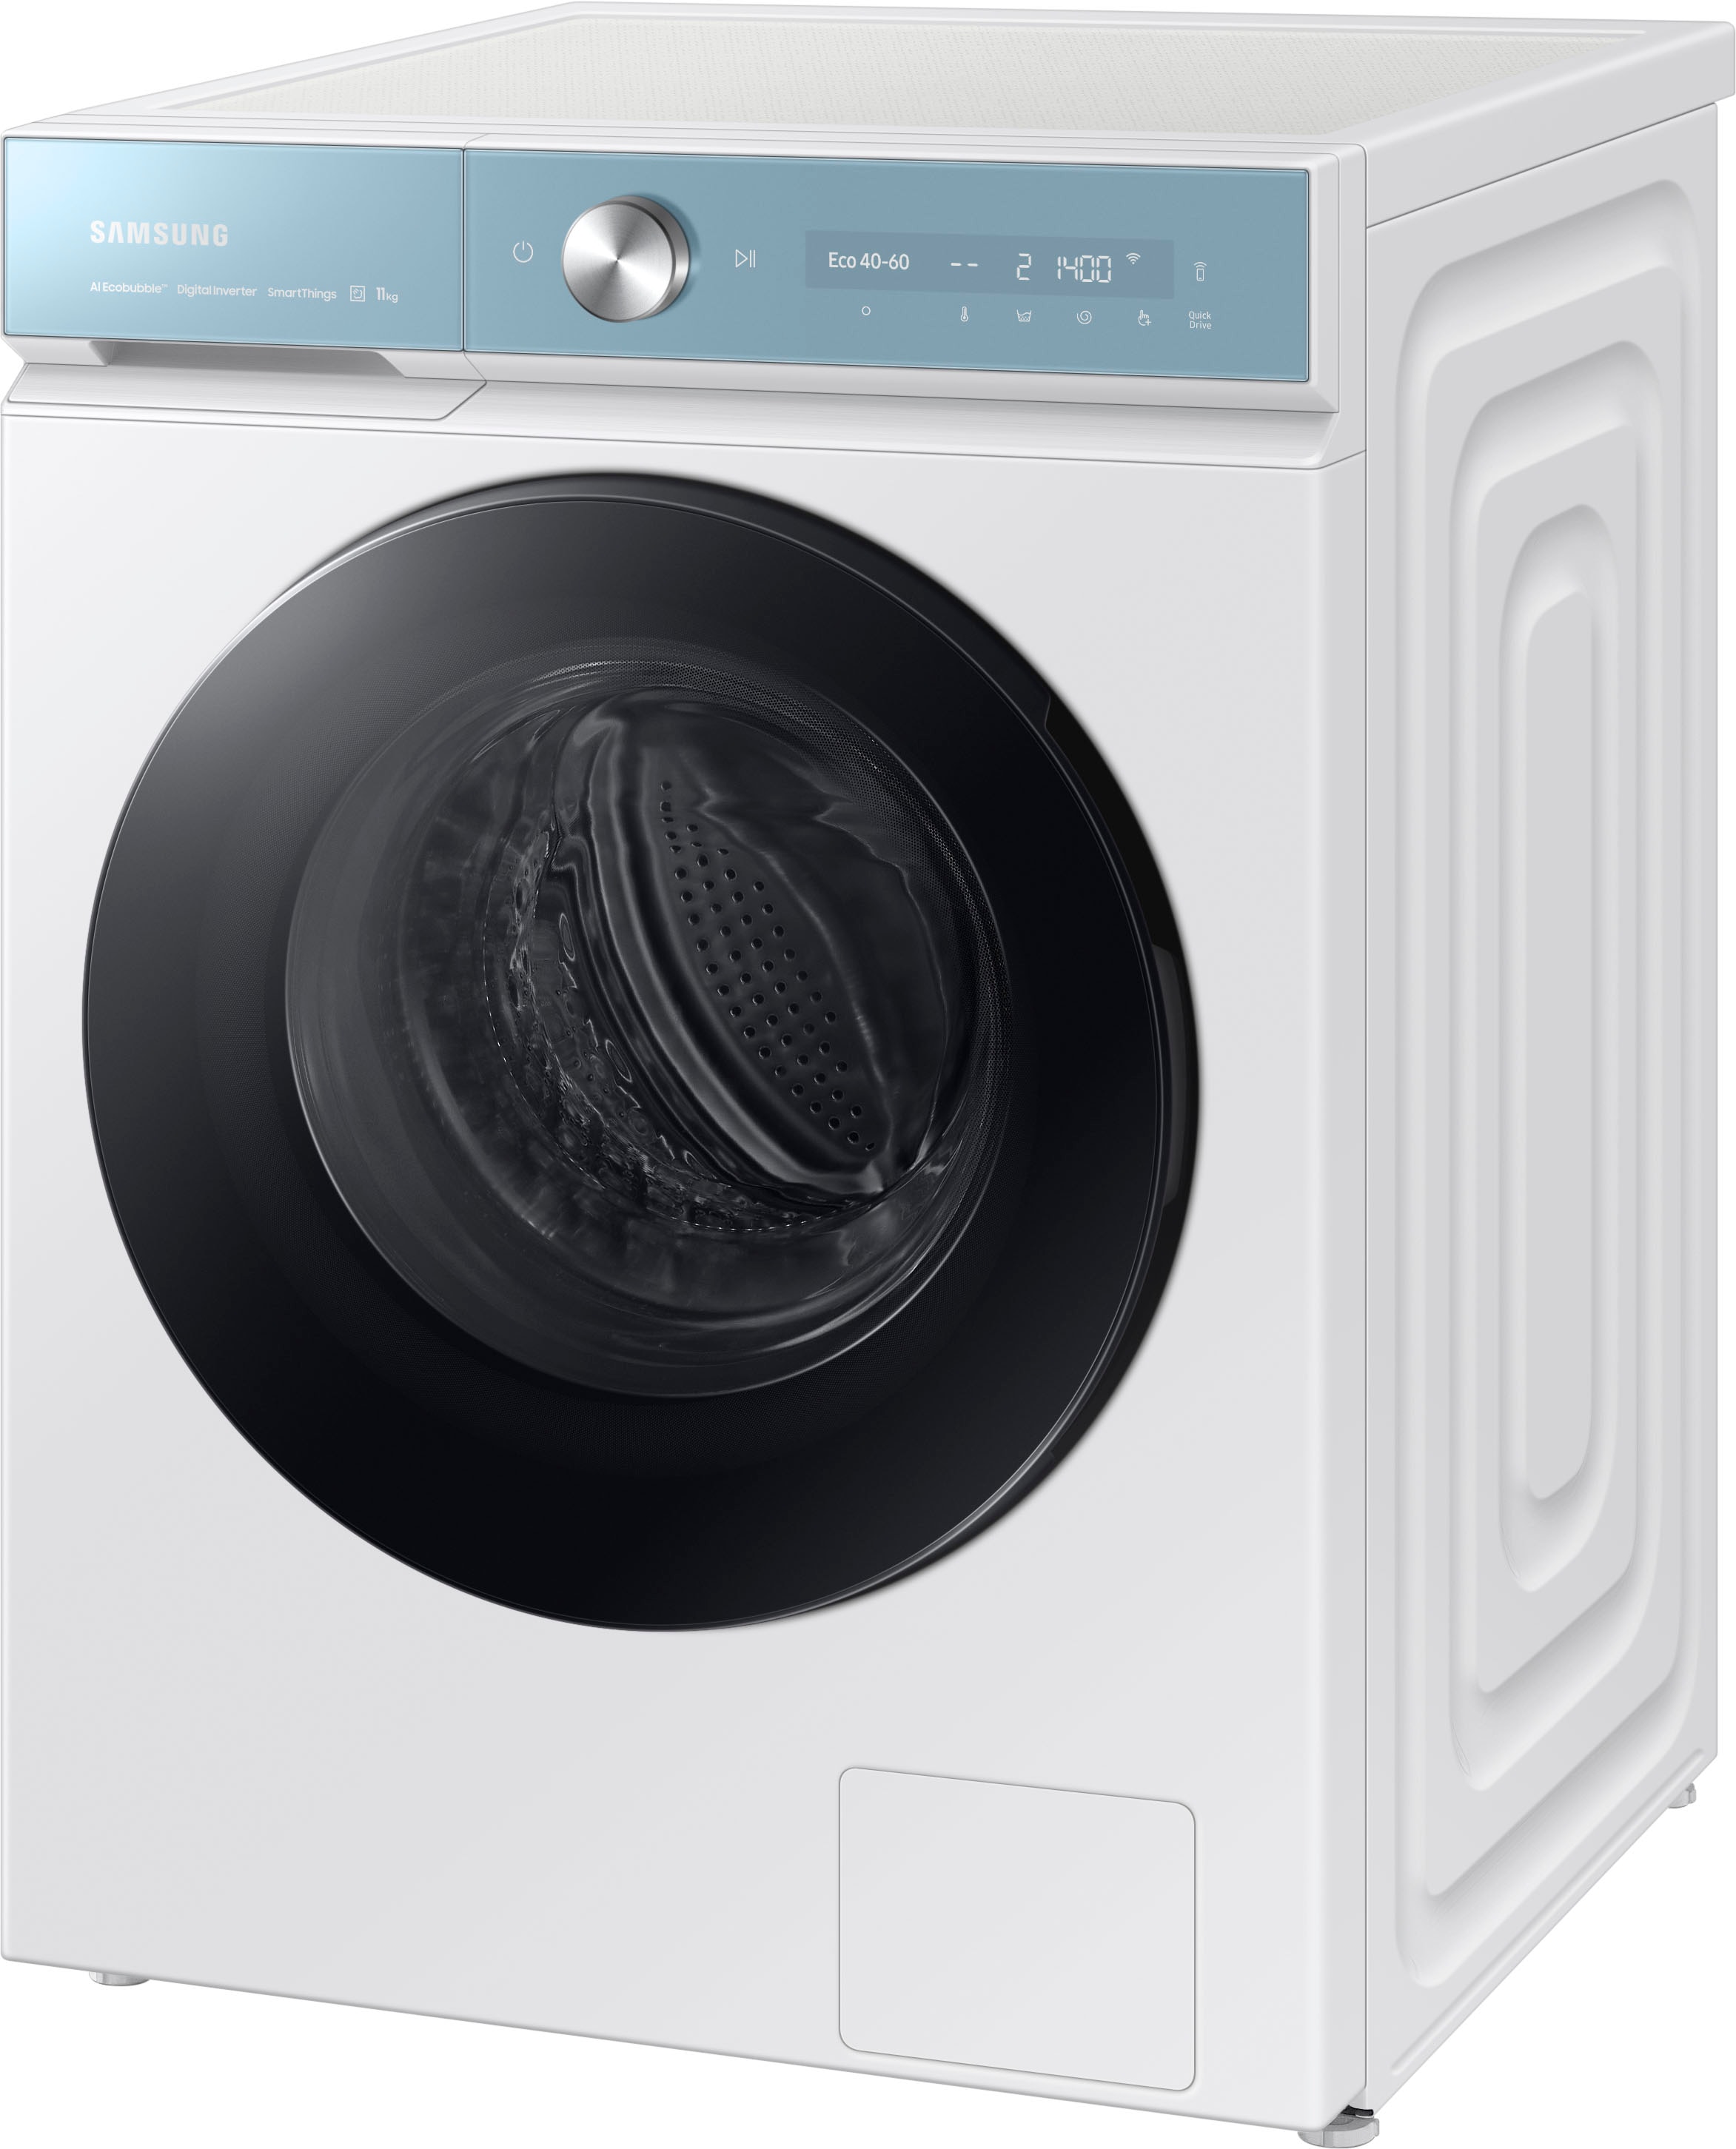 Samsung Waschmaschine »WW11BB945AGM«, 1400 bei WW11BB945AGM, U/min online kg, 11